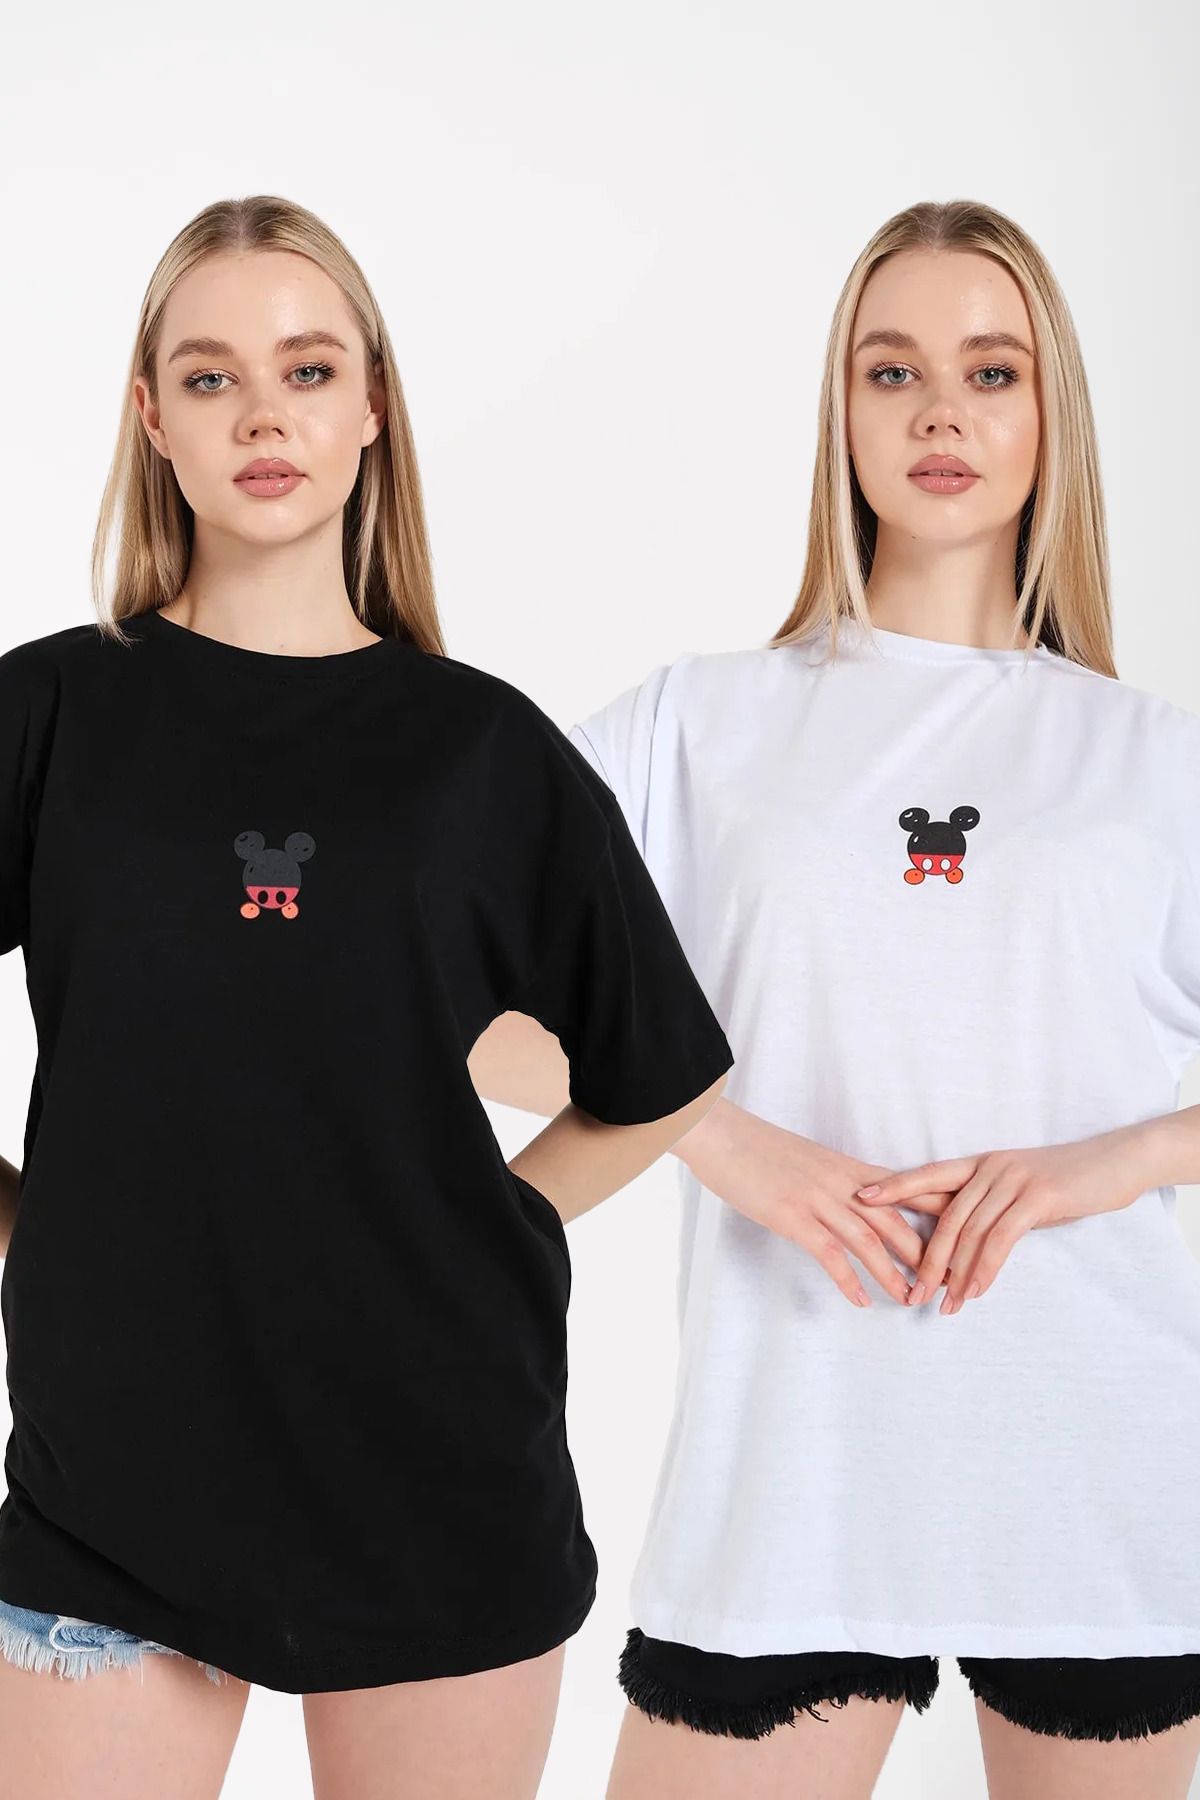 Laundry Kadın Siyah Beyaz Mikey Mouse T-shirt 2'li